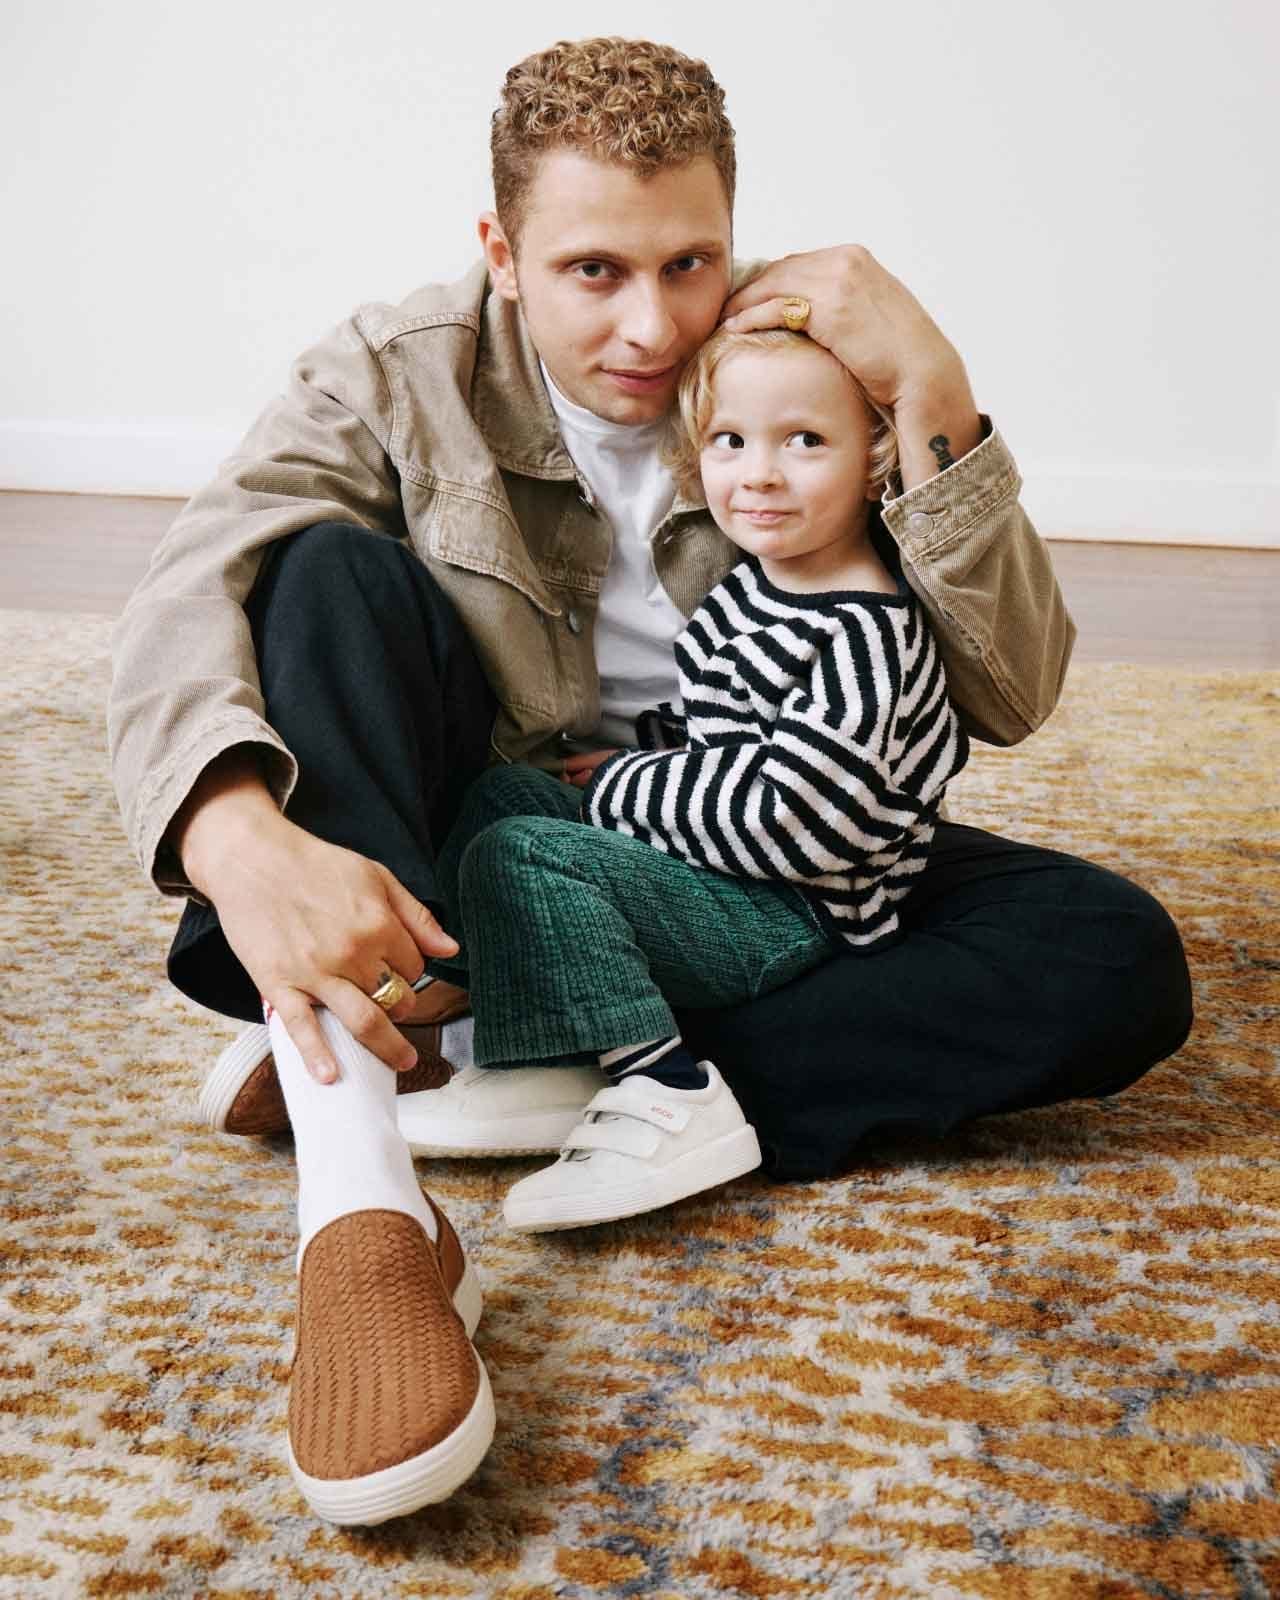 Man sitting on floor holding small child